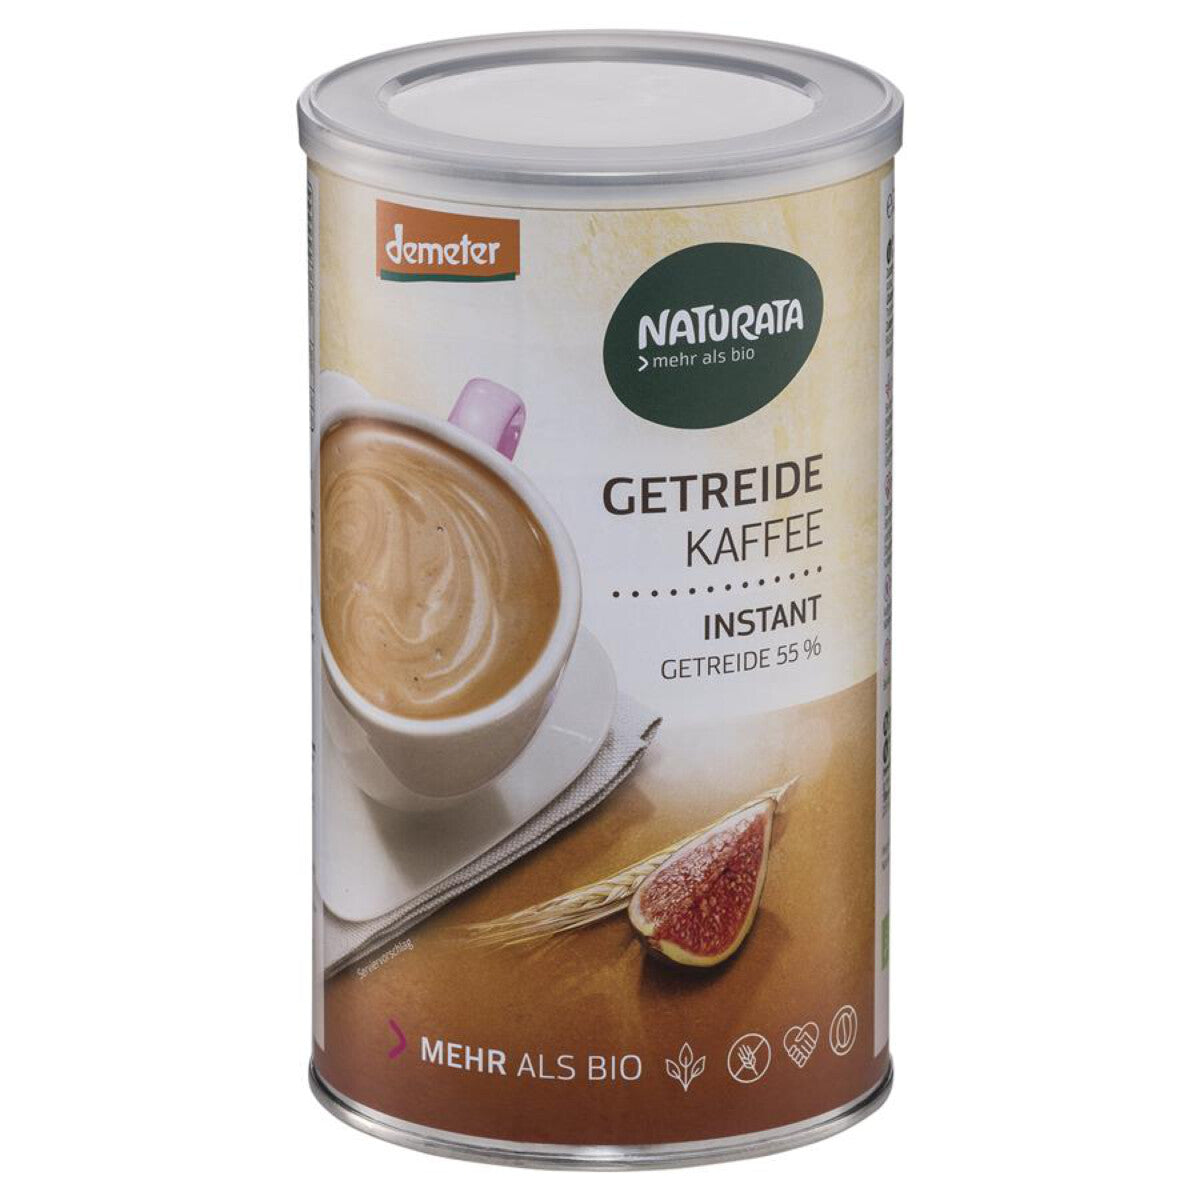 NATURATA Getreidekaffee instant - 250 g